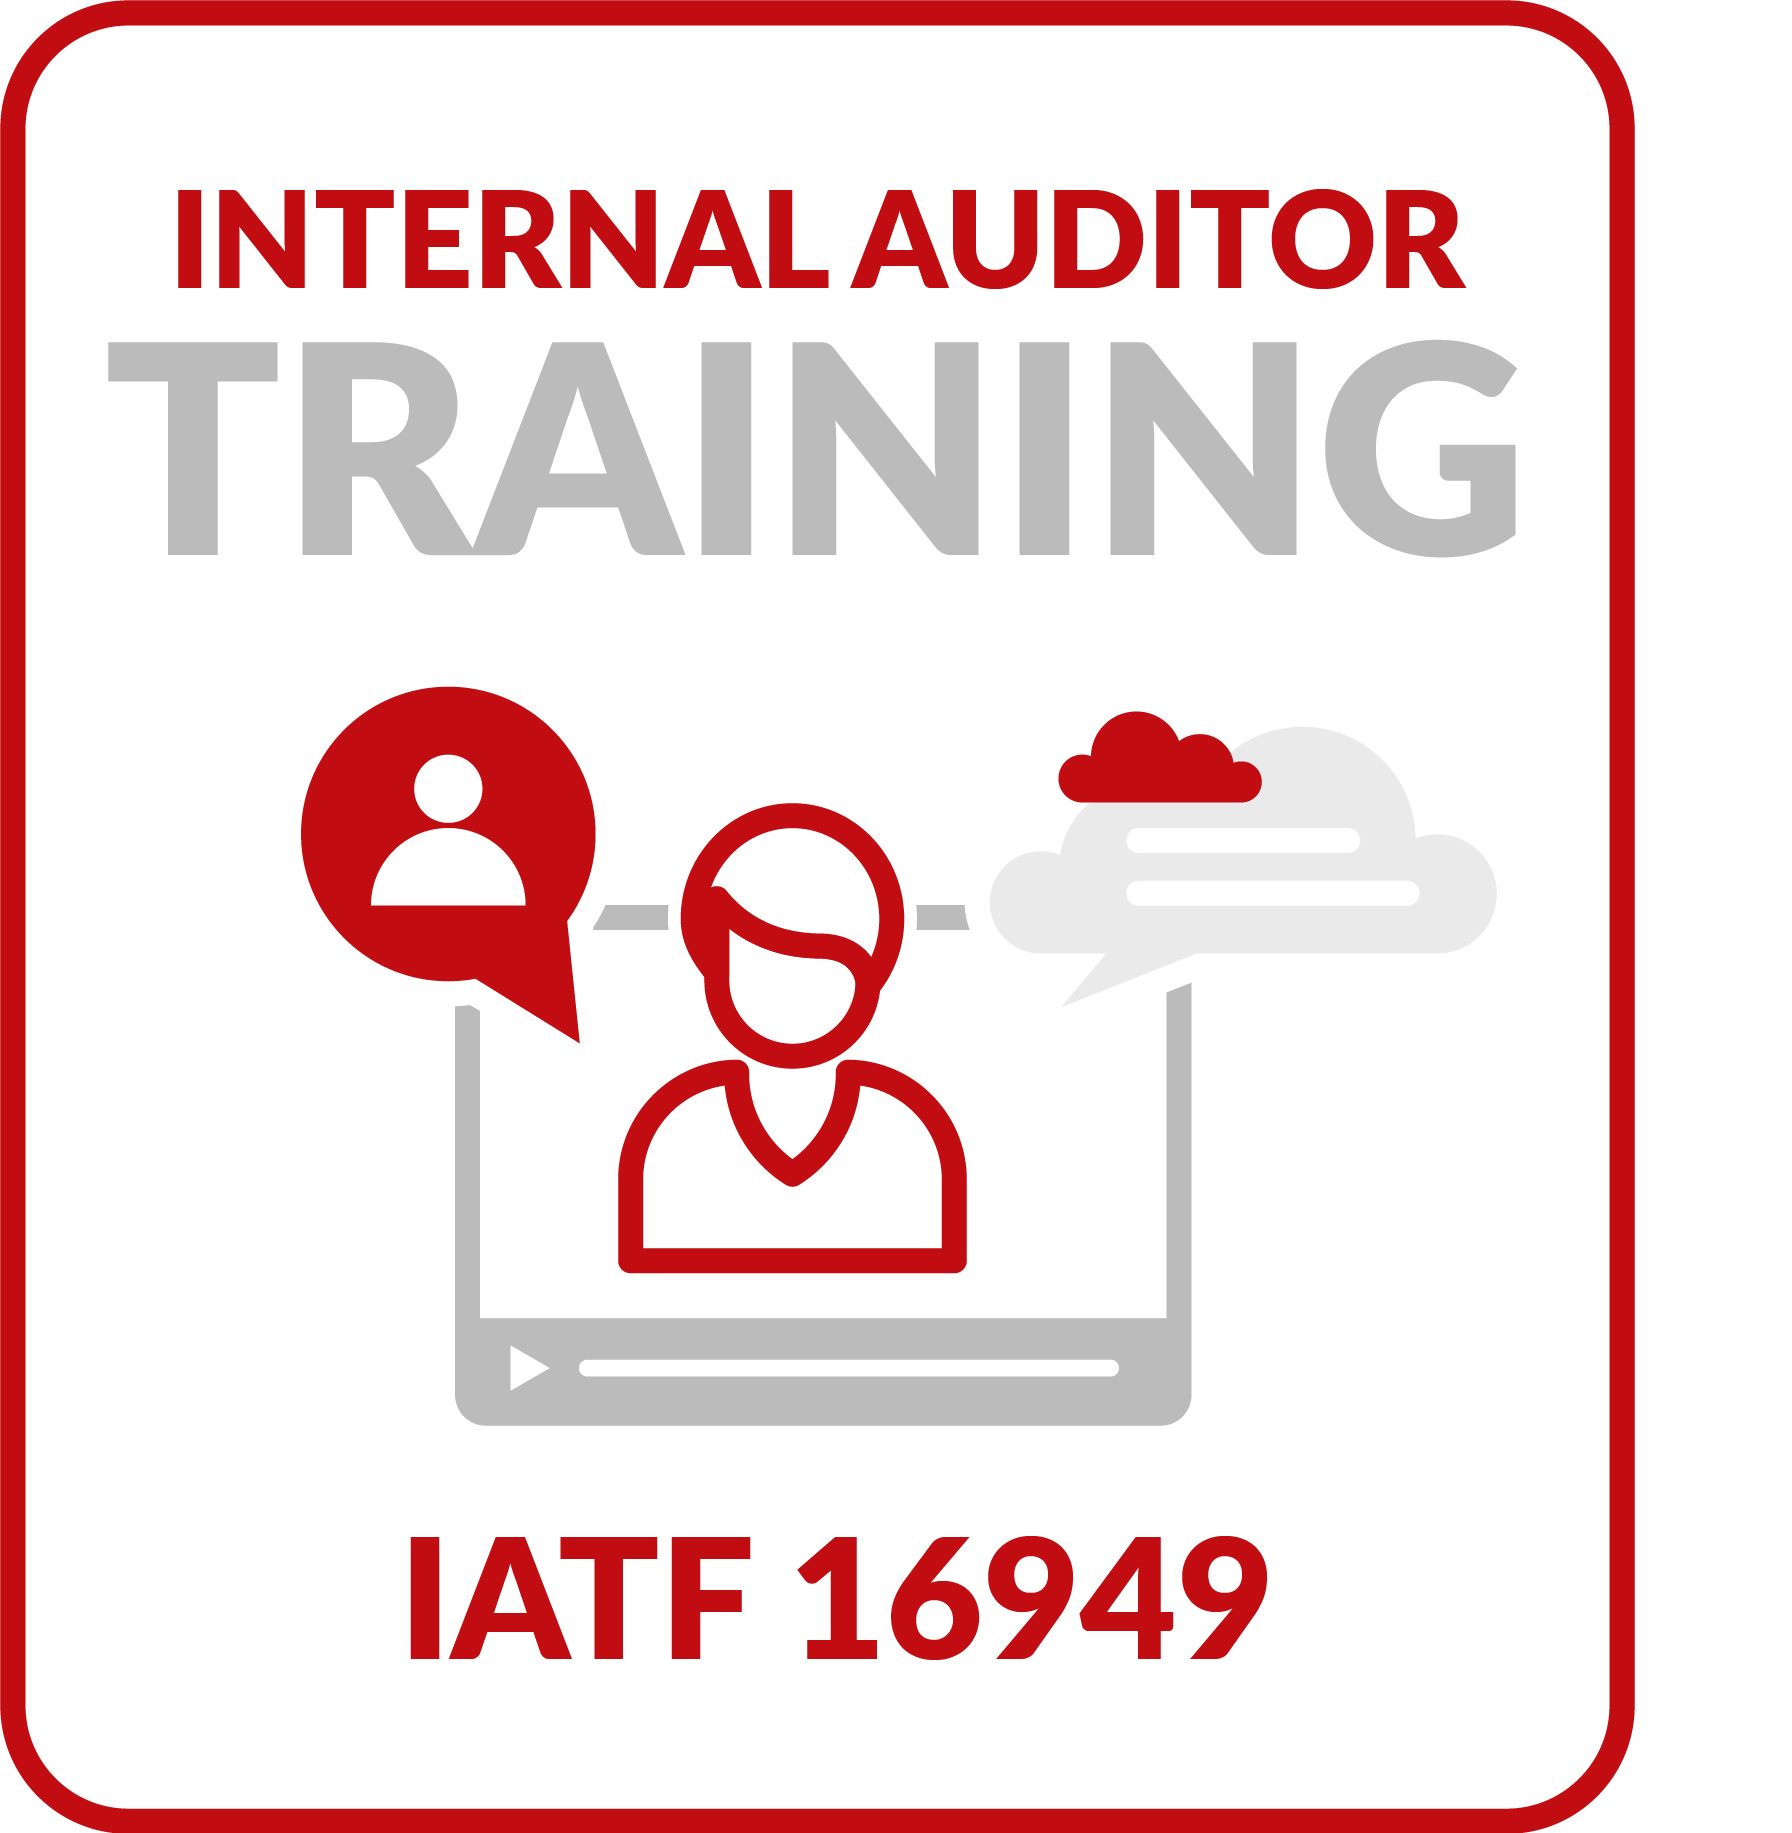 Internal Auditor Training on IATF 16949